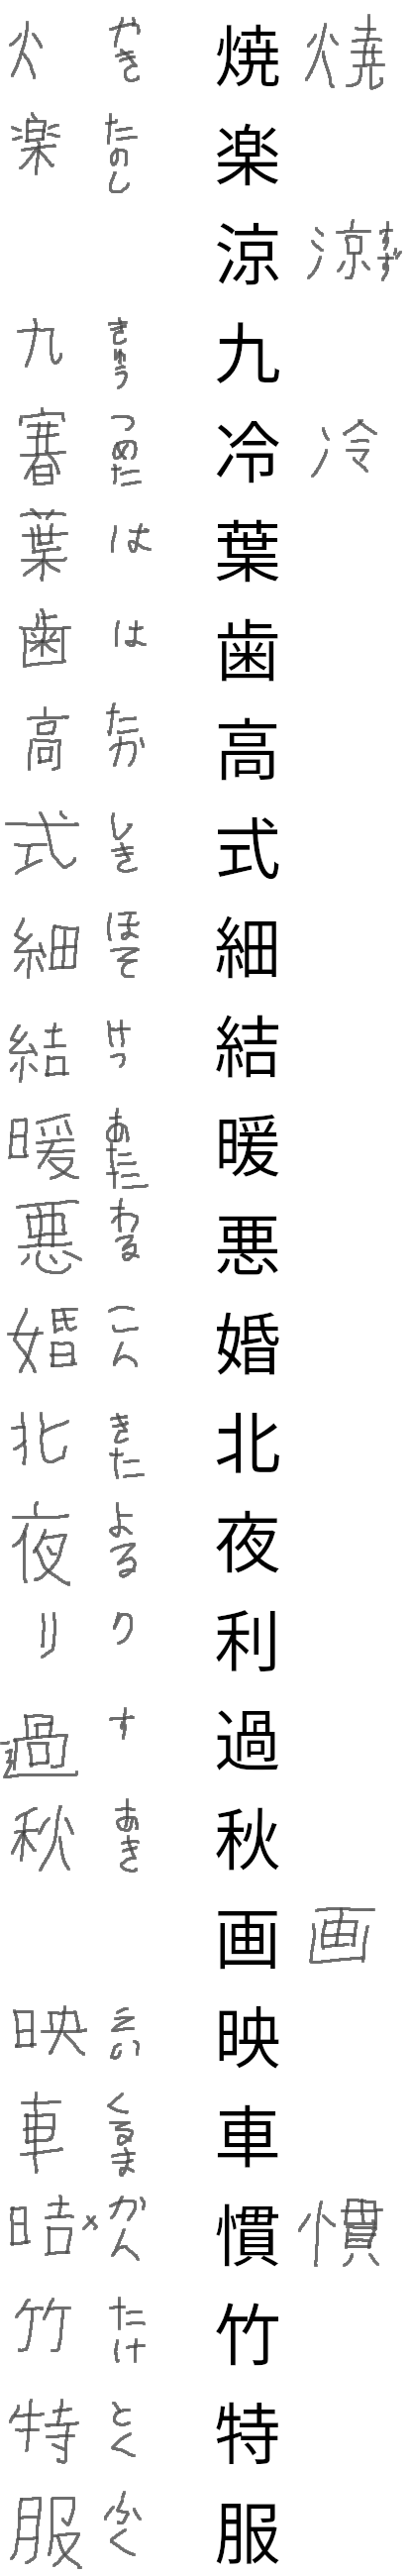 kanji test row 22